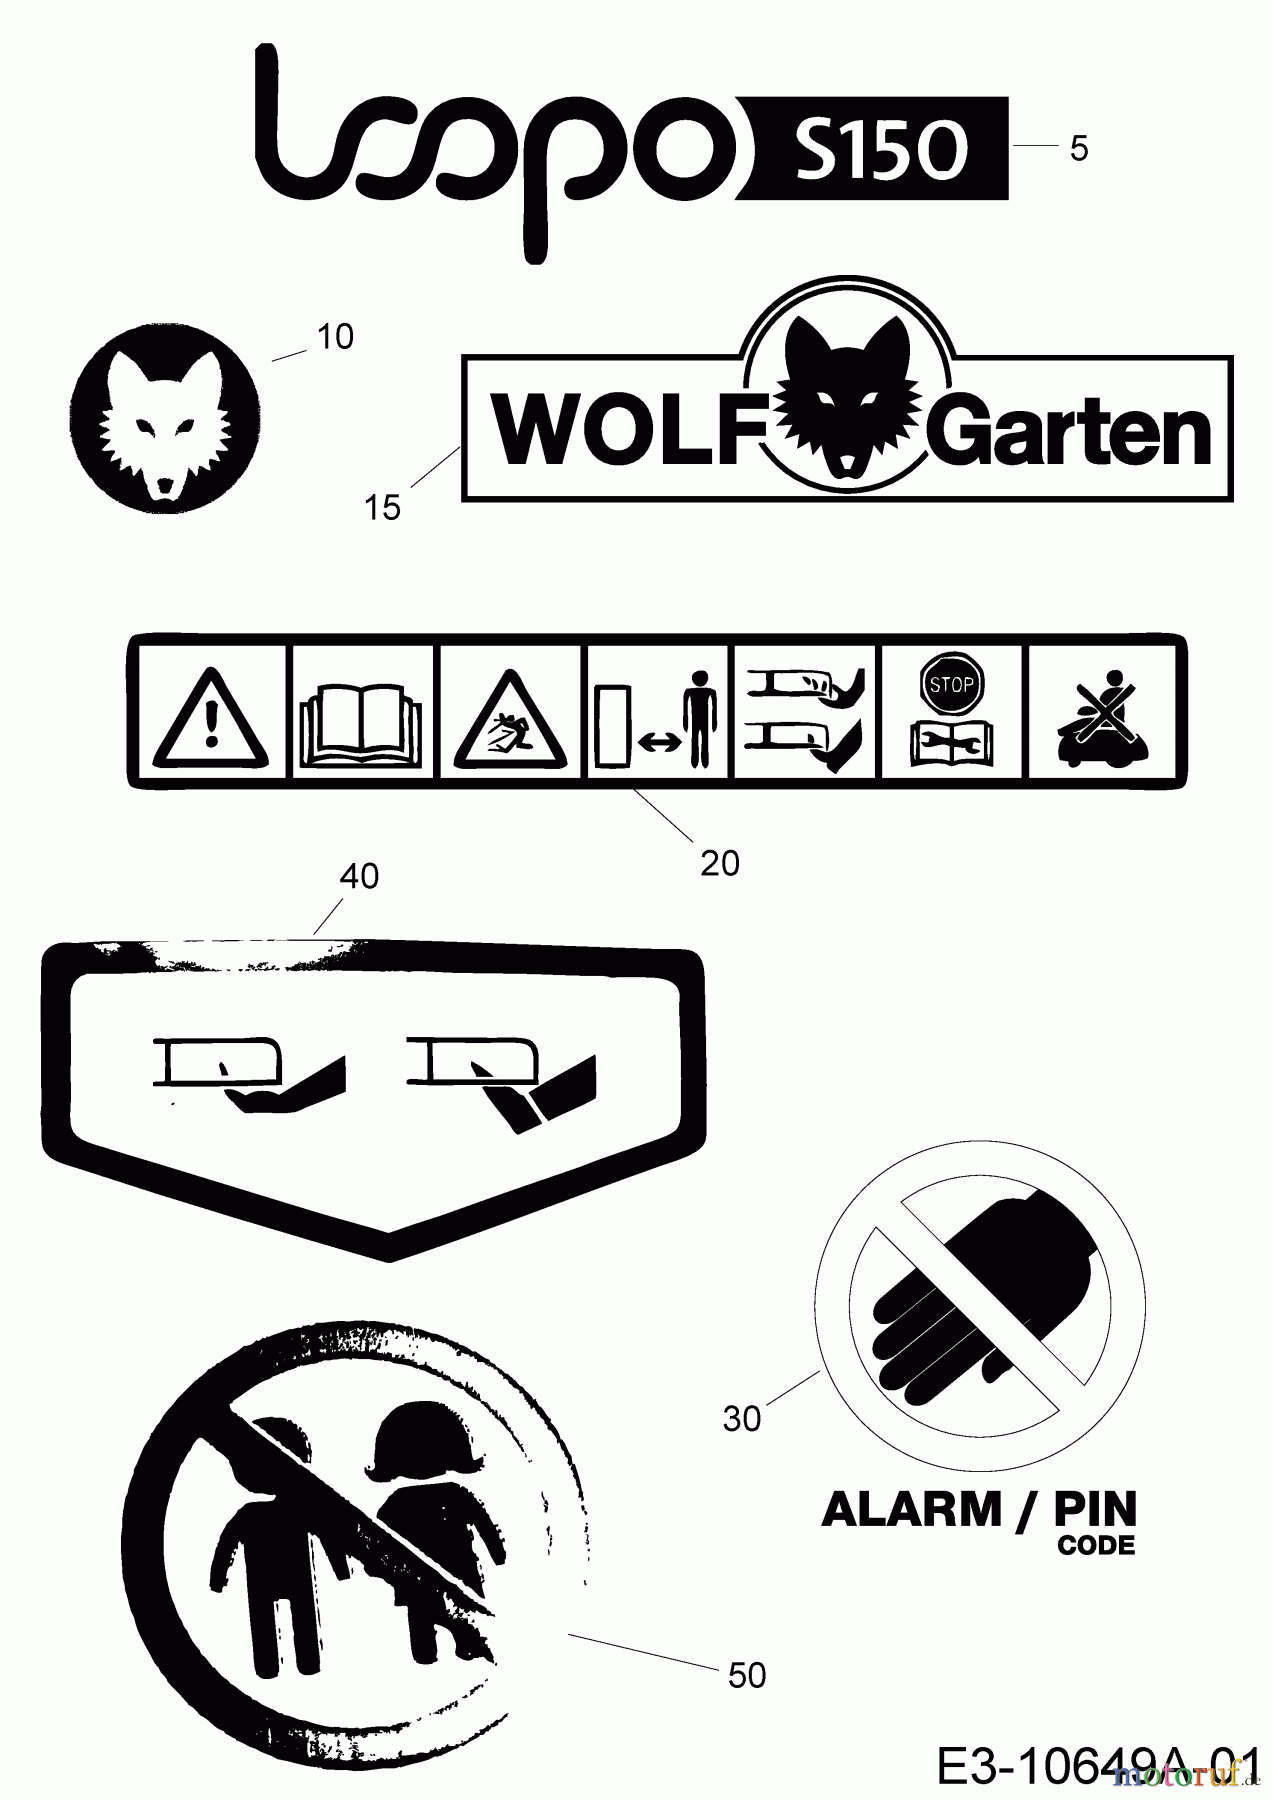  Wolf-Garten Mähroboter Loopo S150 22BXBACA650 (2020) Aufkleber